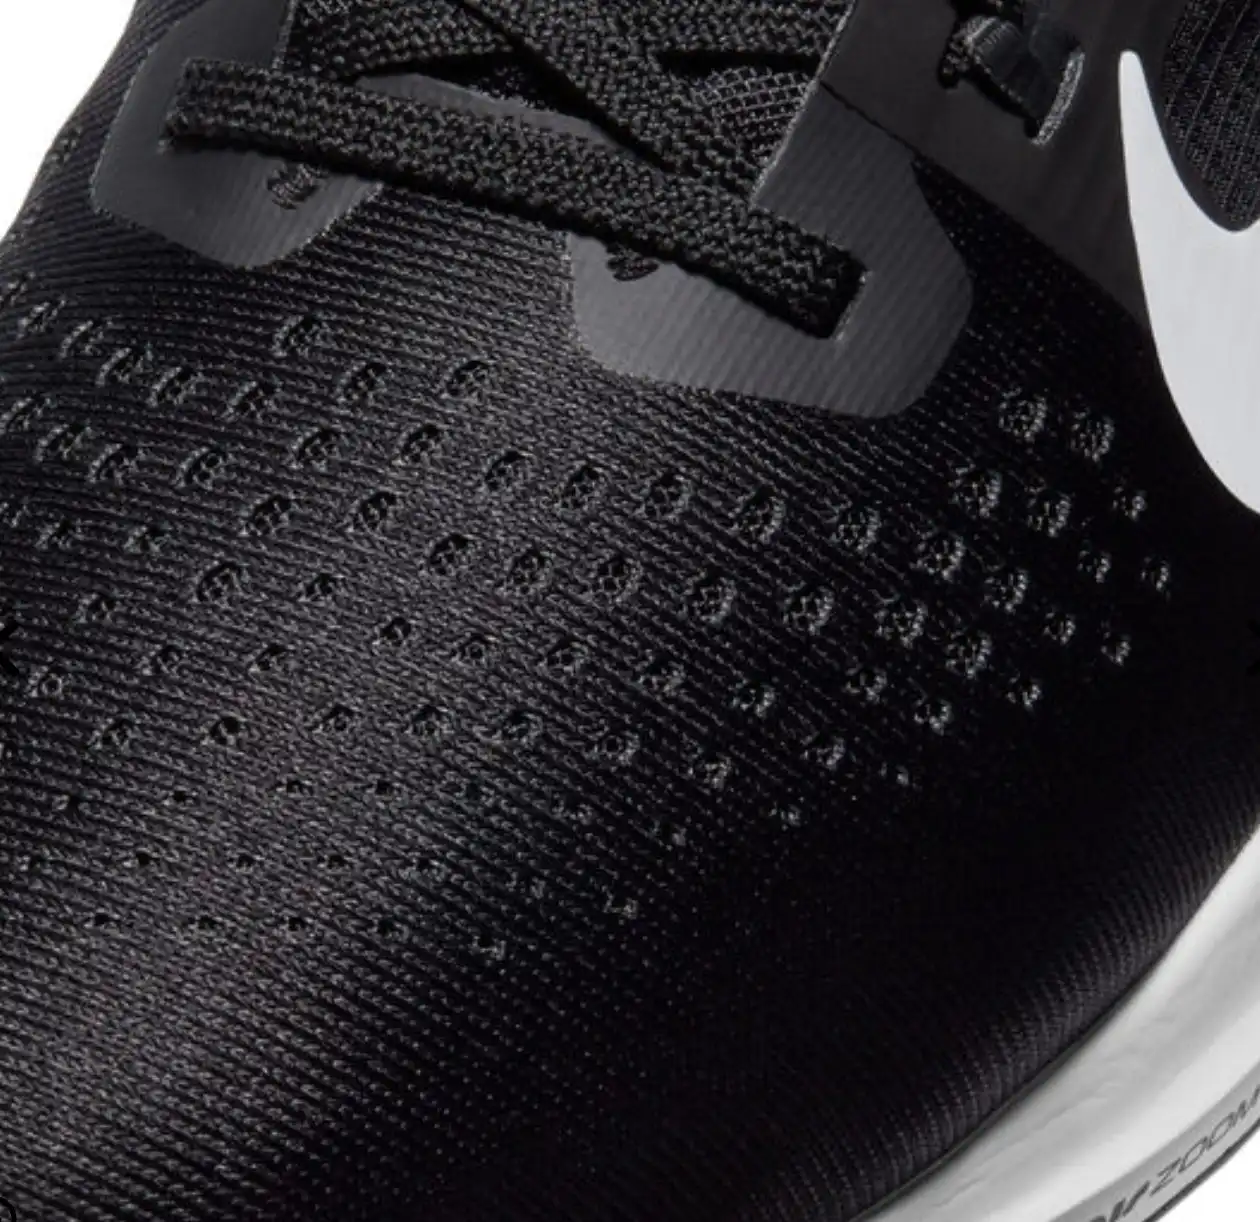 Nike Men's Air Zoom Vomero 15 Running Shoes Training Low Top Sneaker - Black/White